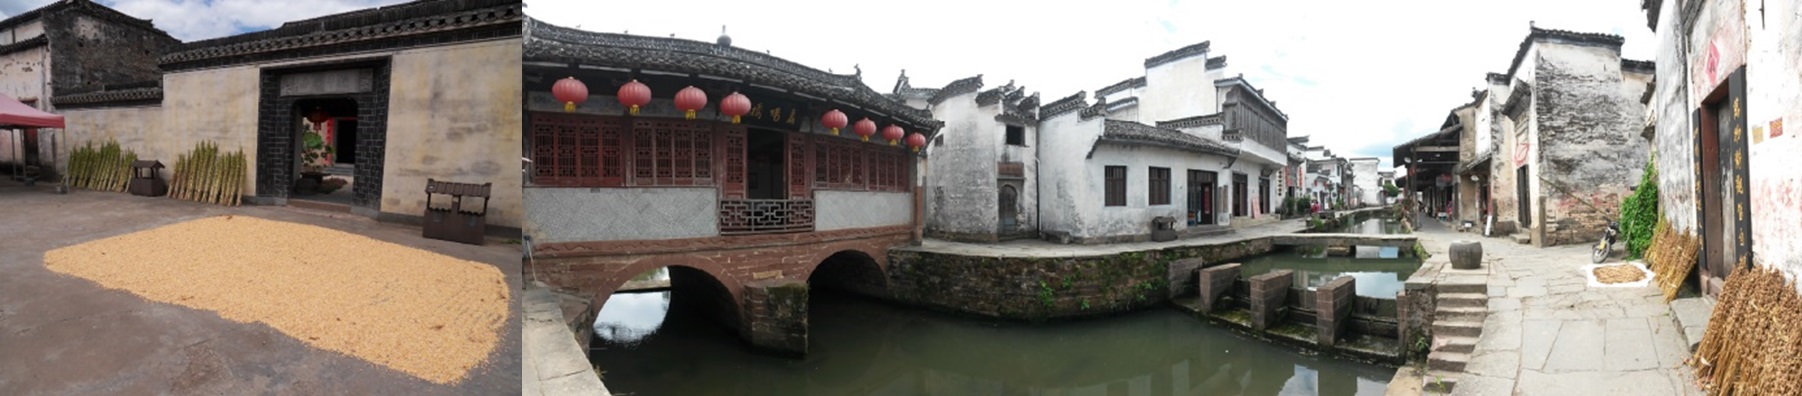 Altes, belebtes Museumsdorf Huizhou